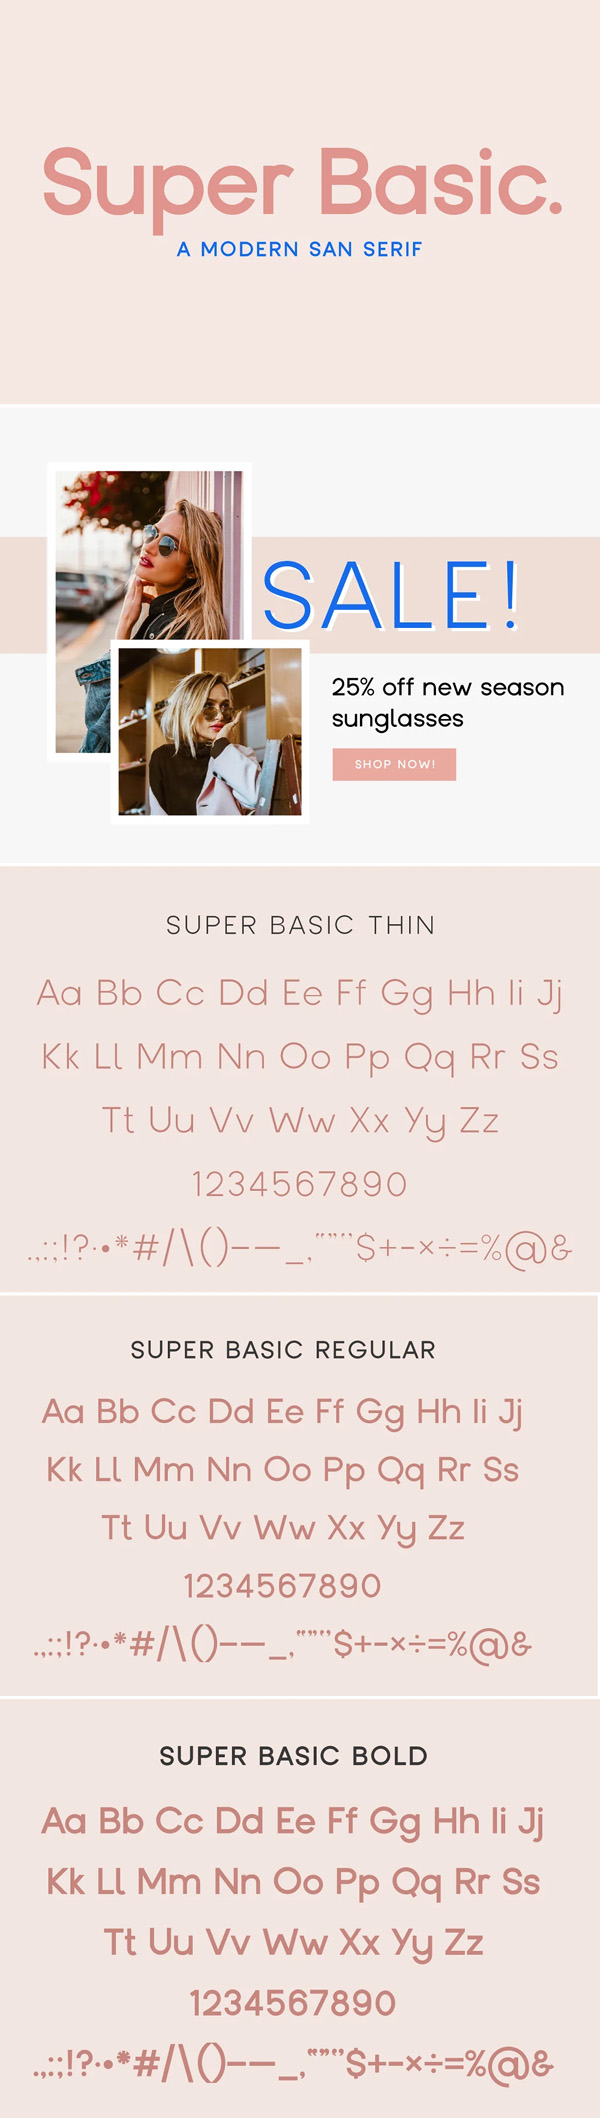 Super Basic - A Modern San Serif Free Font